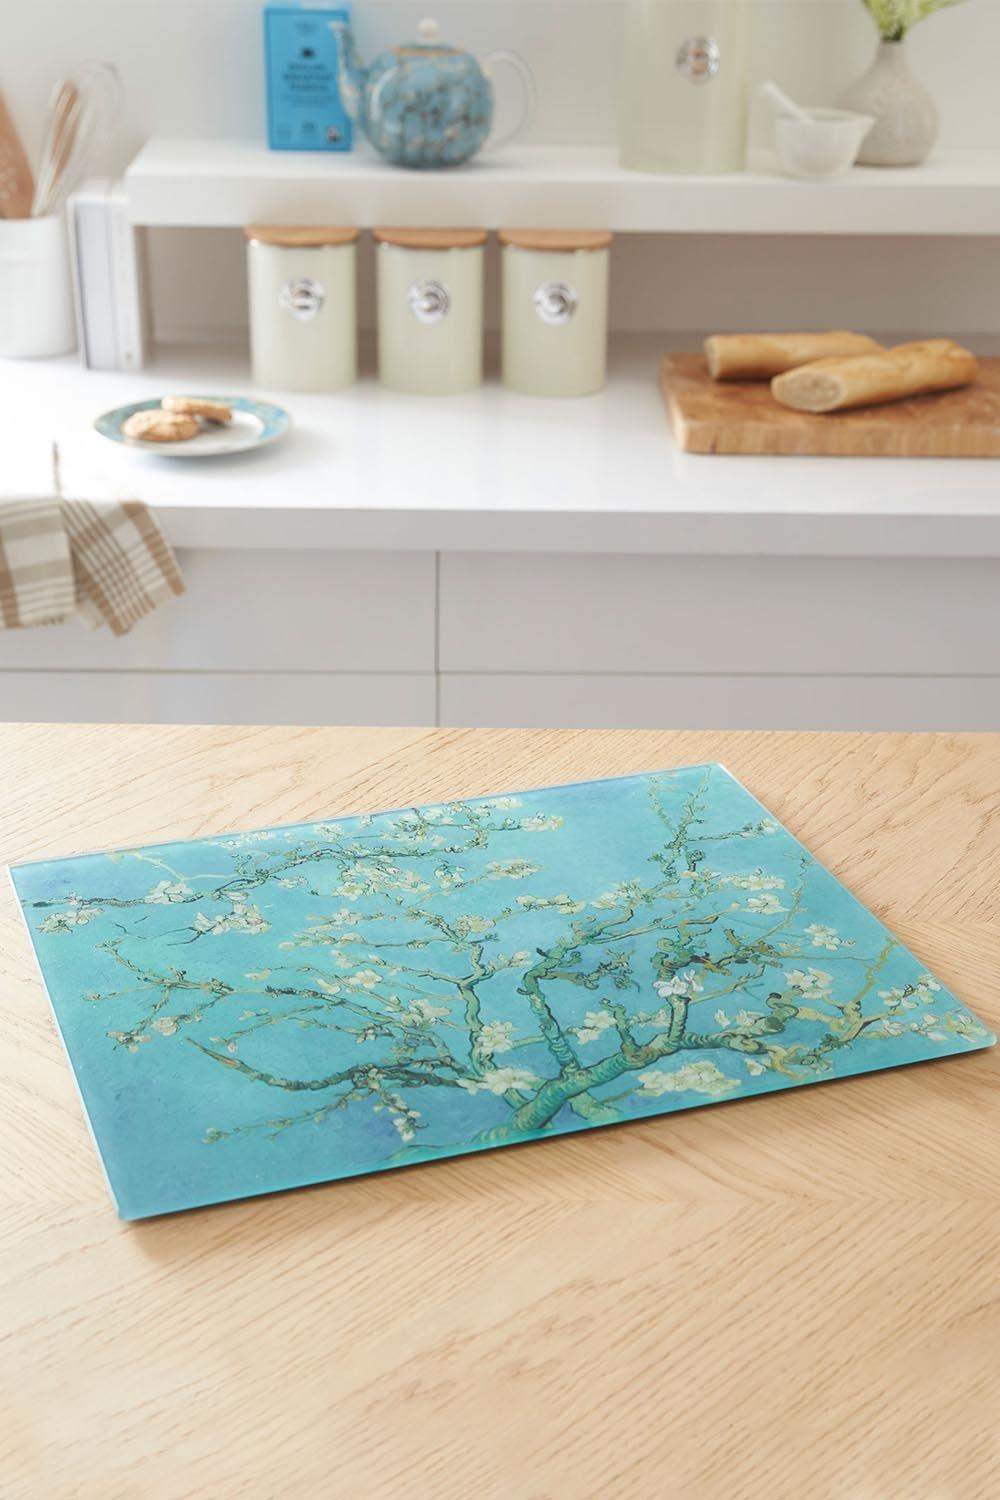 Buy Padded Sports Bra Vincent Van Gogh Almond Blossom Aesthetic